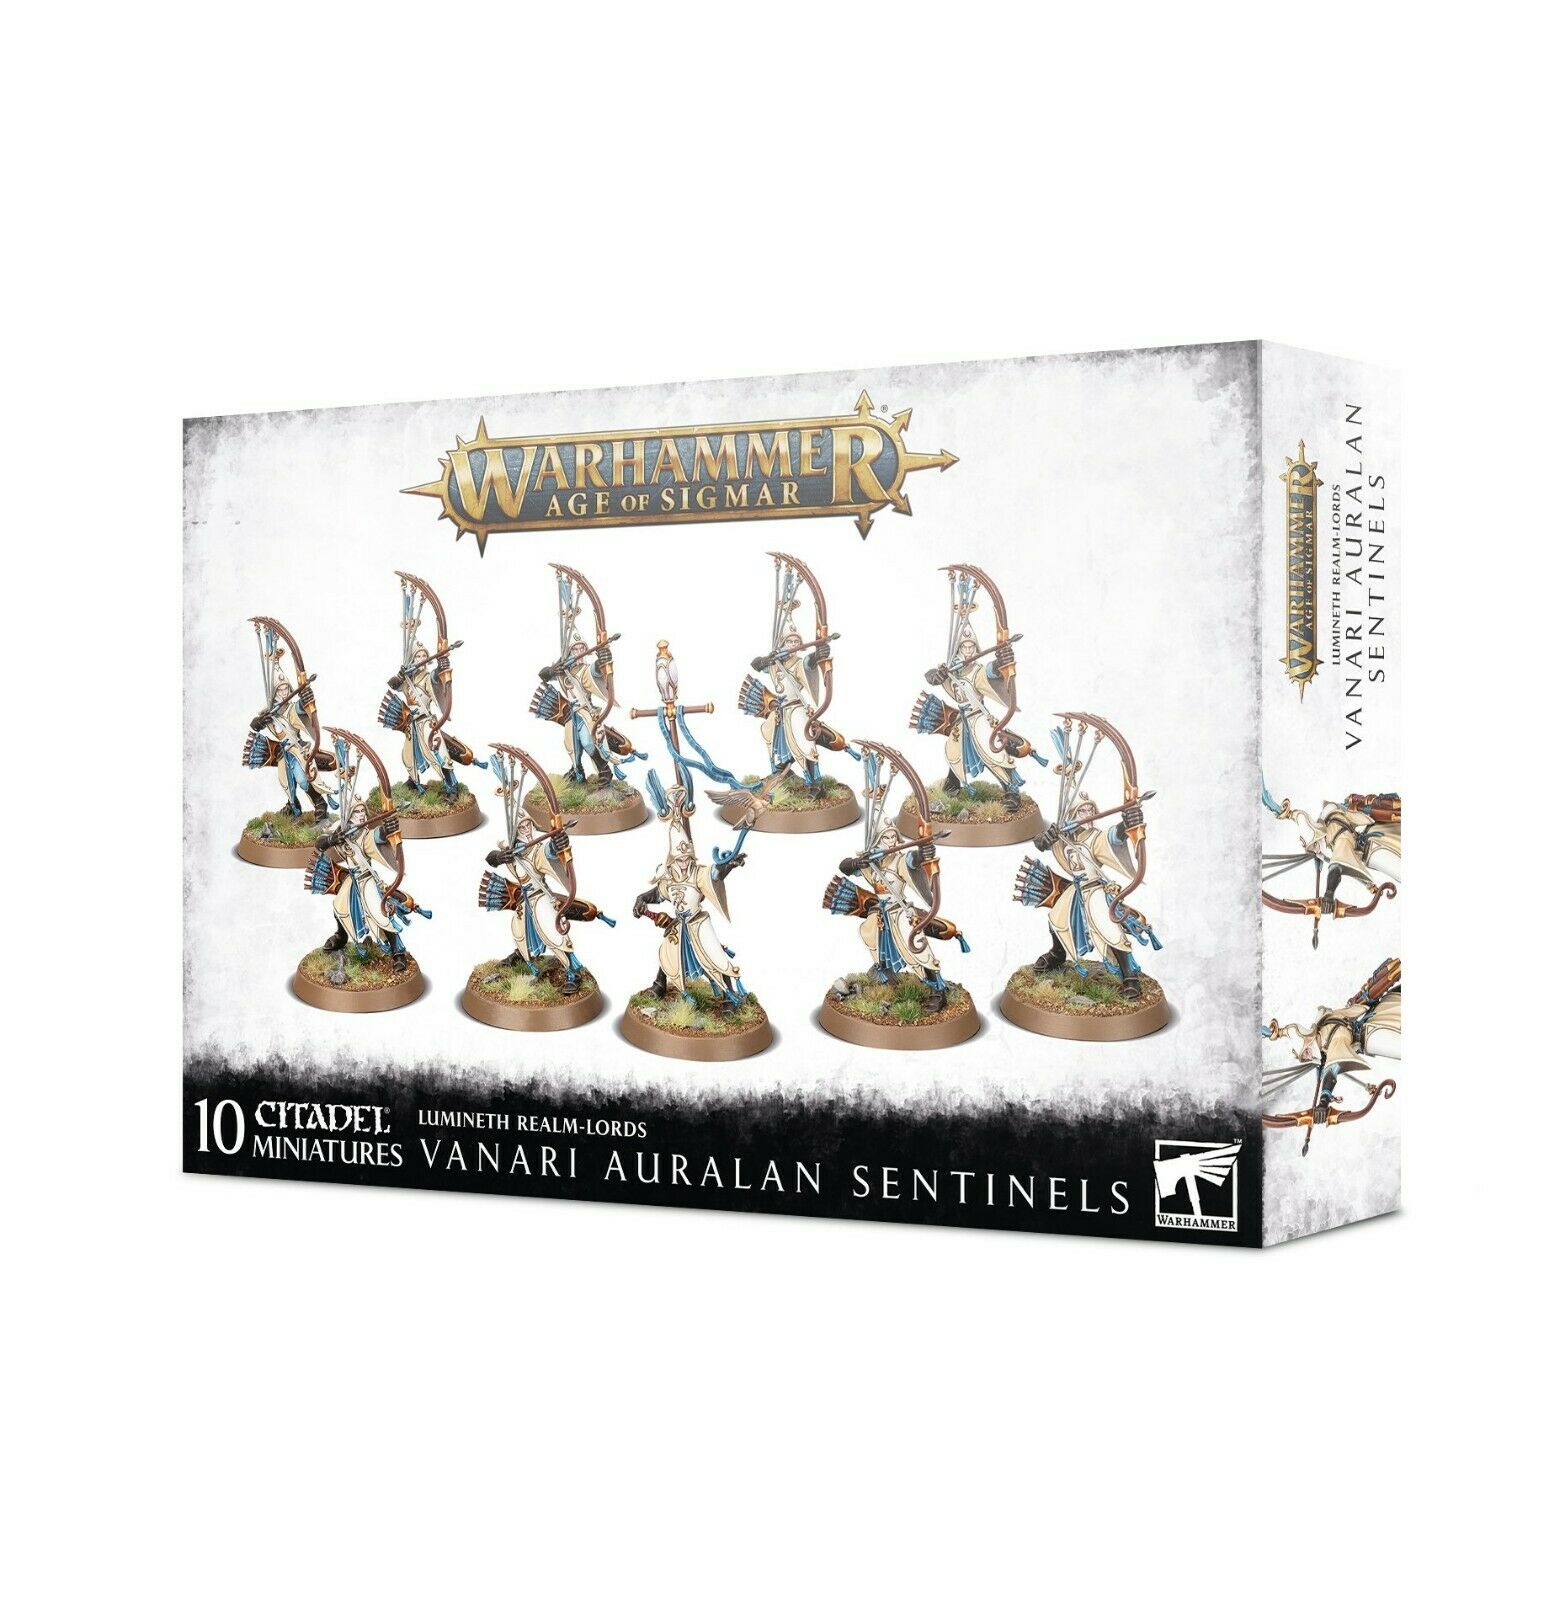 Lumineth Realm-Lords Vanari Auralan Sentinels | GrognardGamesBatavia